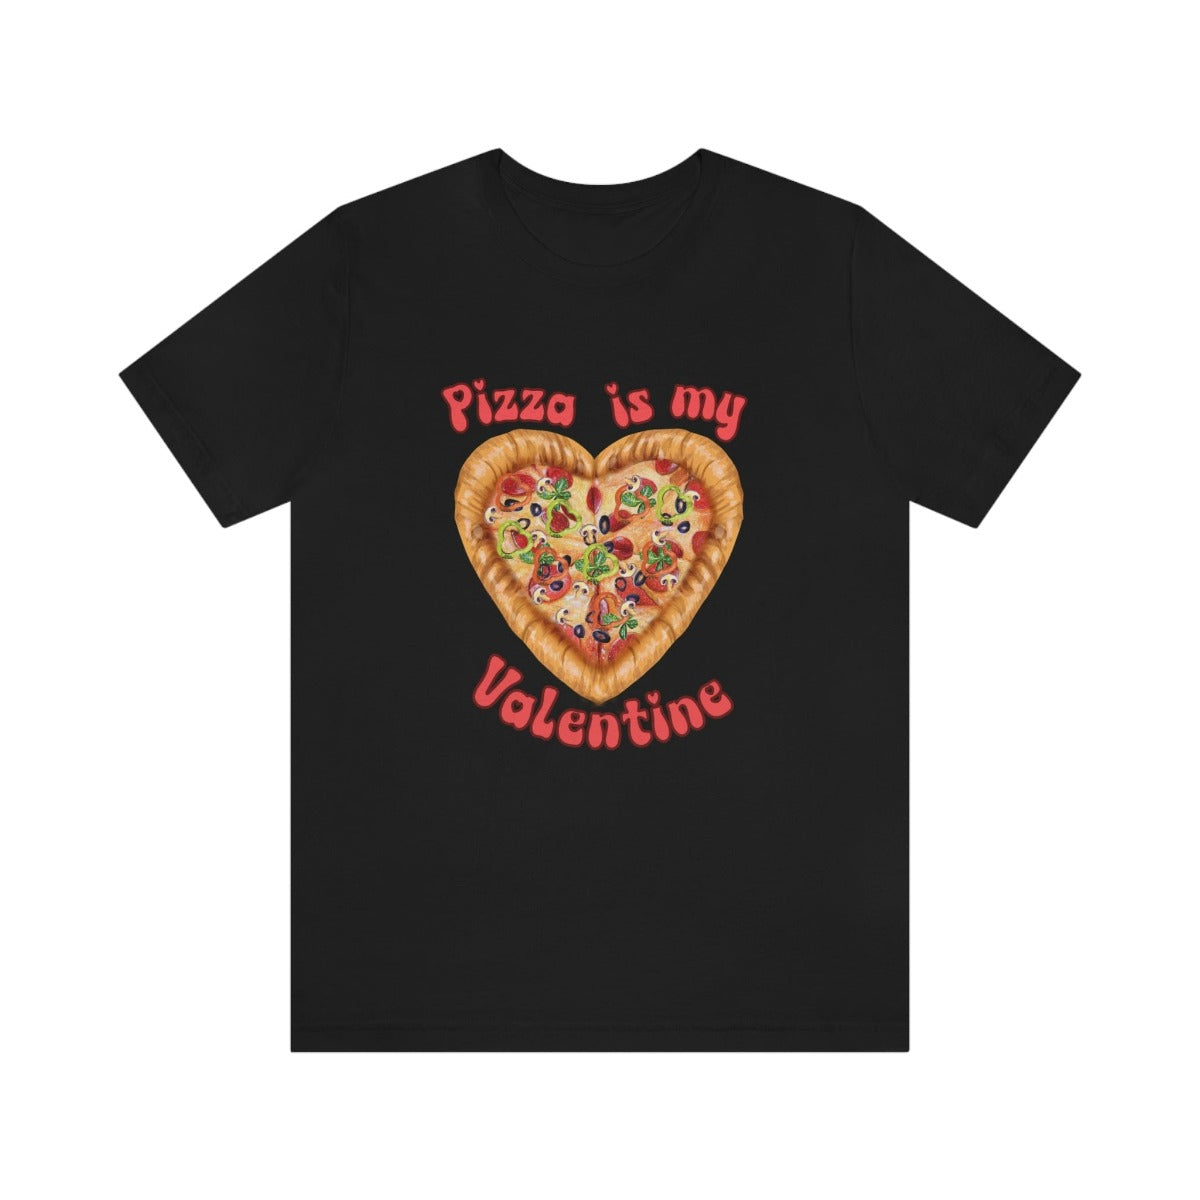 Printify T-Shirt Black / S Valentine shirt, Pizza is My Valentine Shirt, Pizza Shirt, Funny Shirt, Unisex Short Sleeve Tee, Graphic Tee, Gift , Free Shipping 21599221209906644786